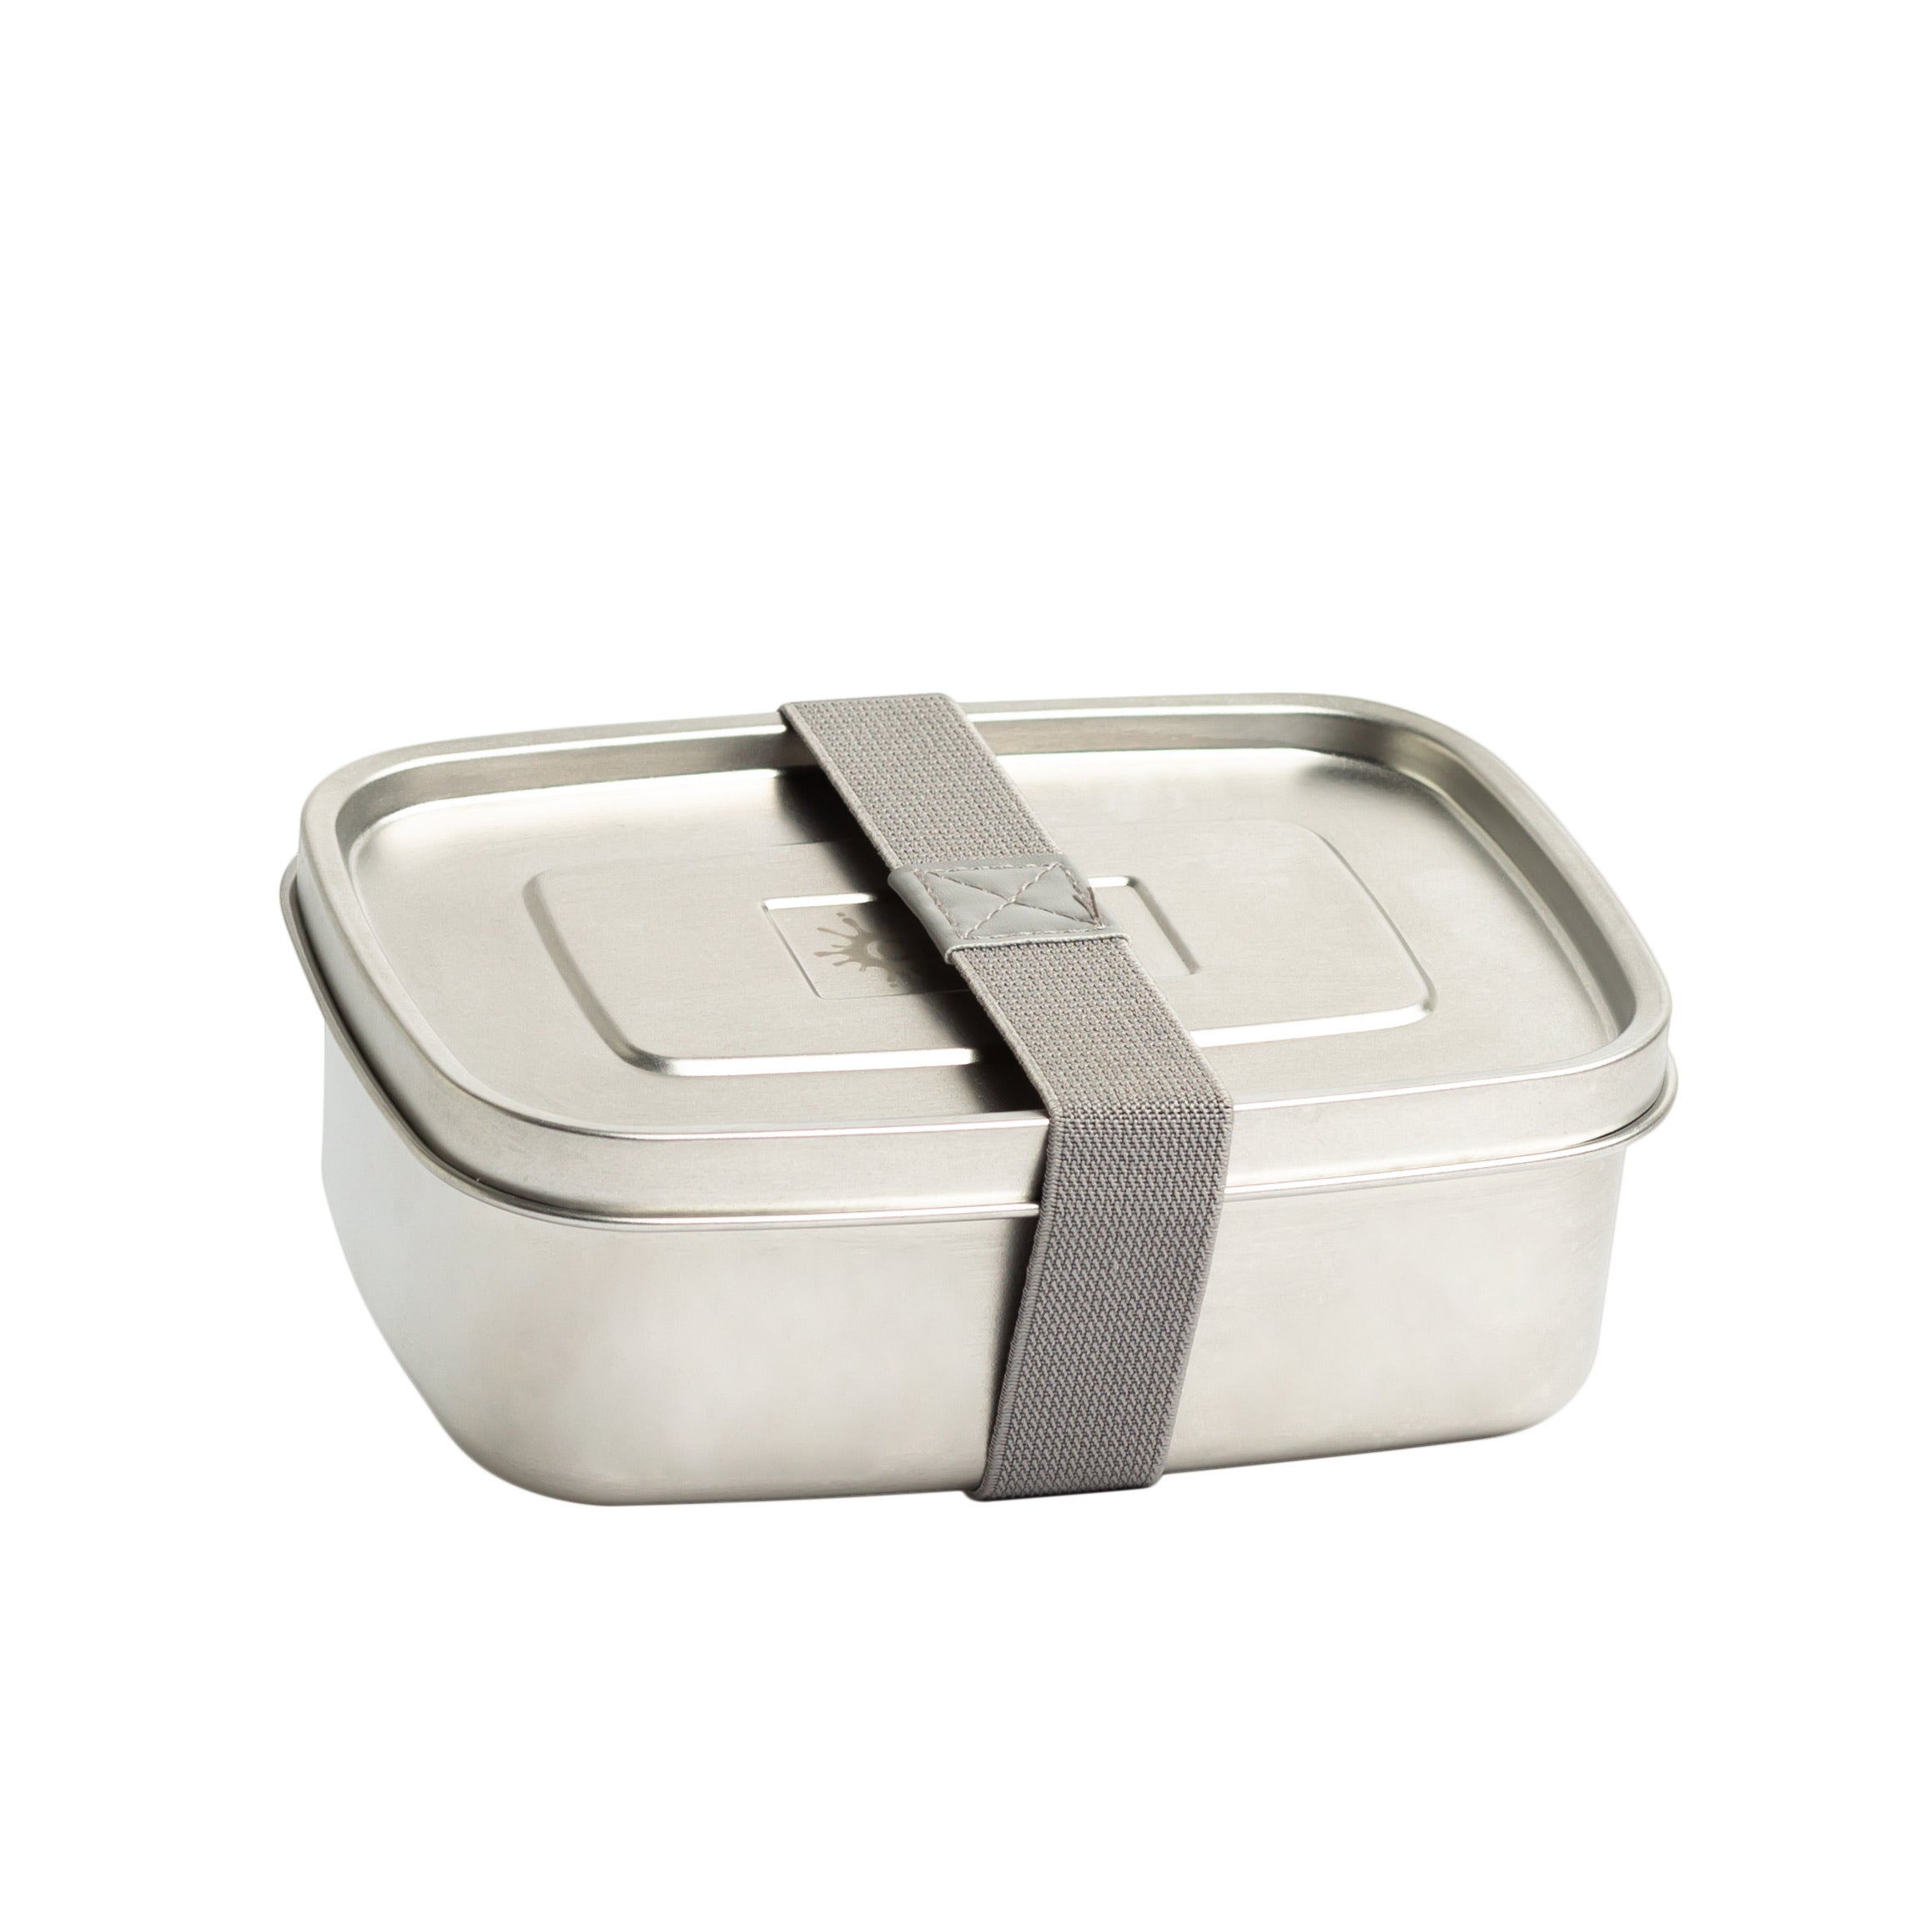 Cheeki - The Essential Stainless Steel Lunchbox